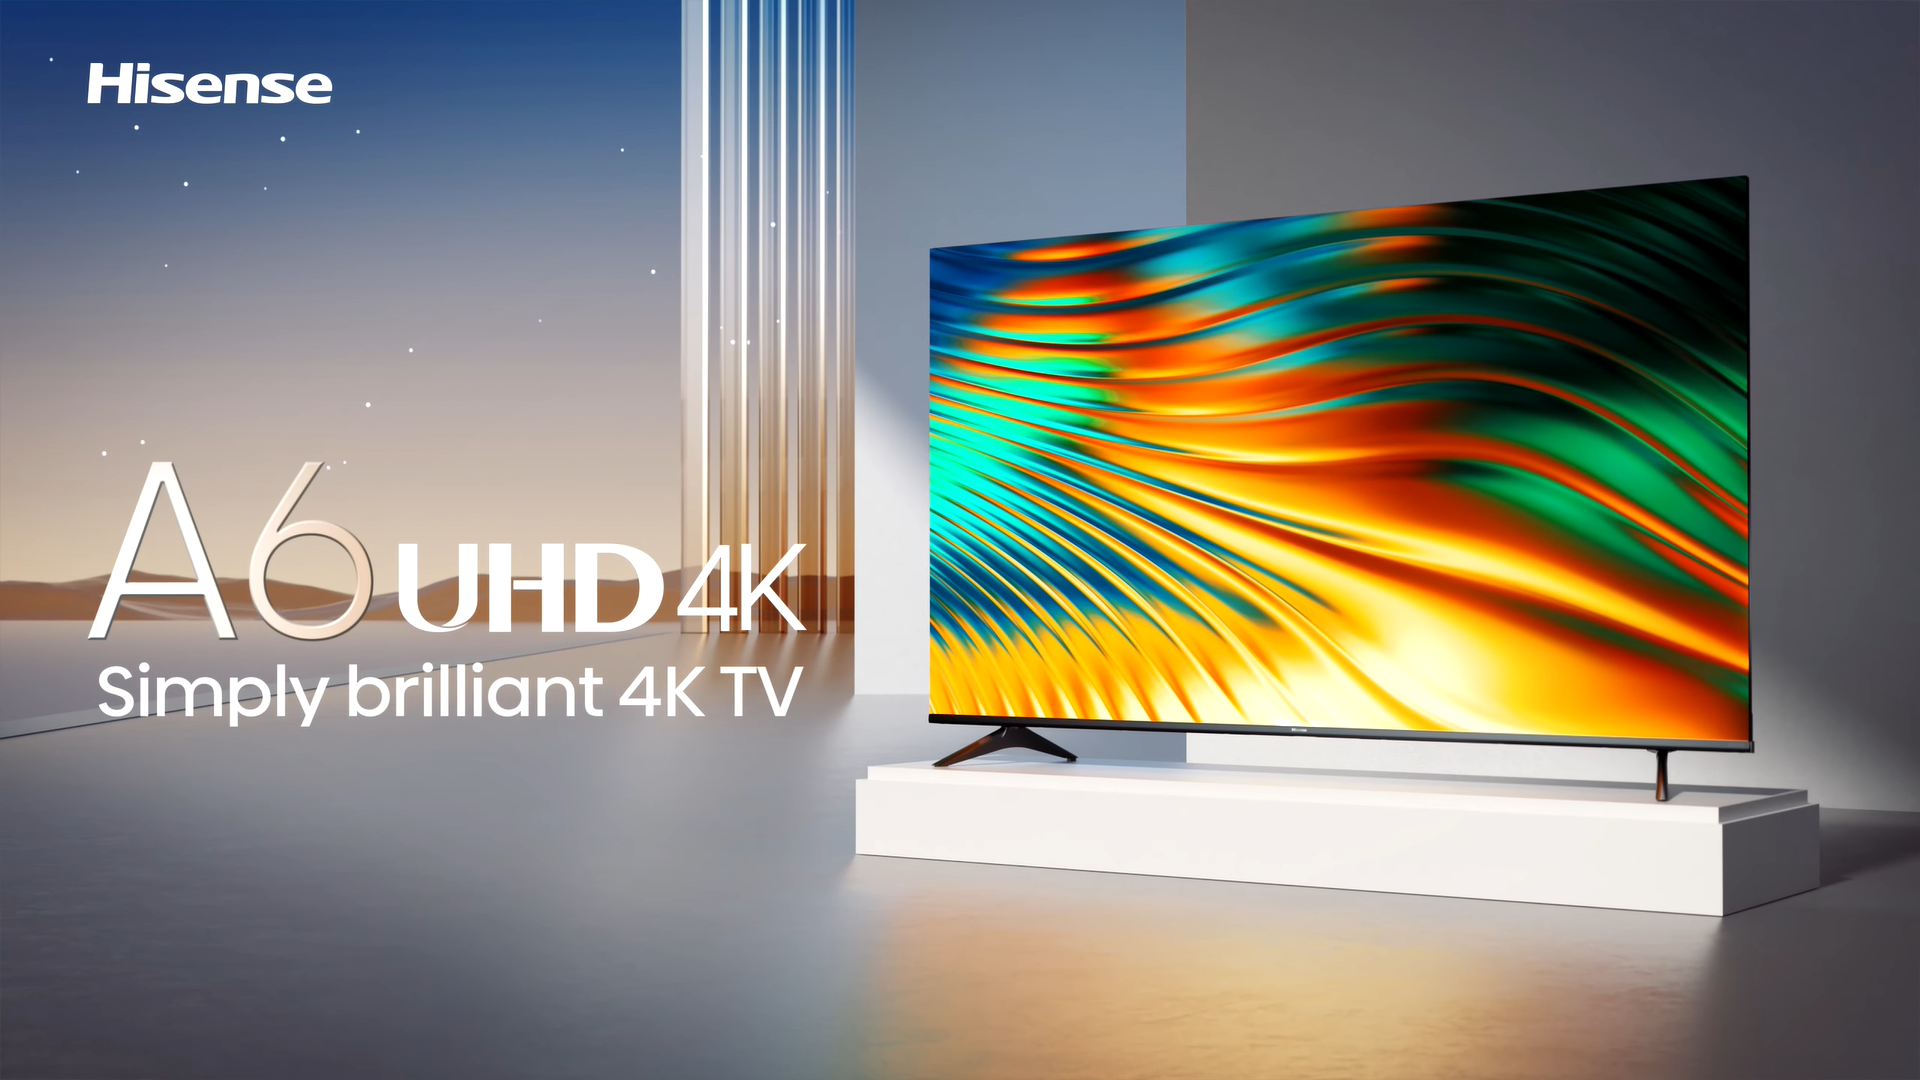 Hisense A6 UHD 4K smart TV featured